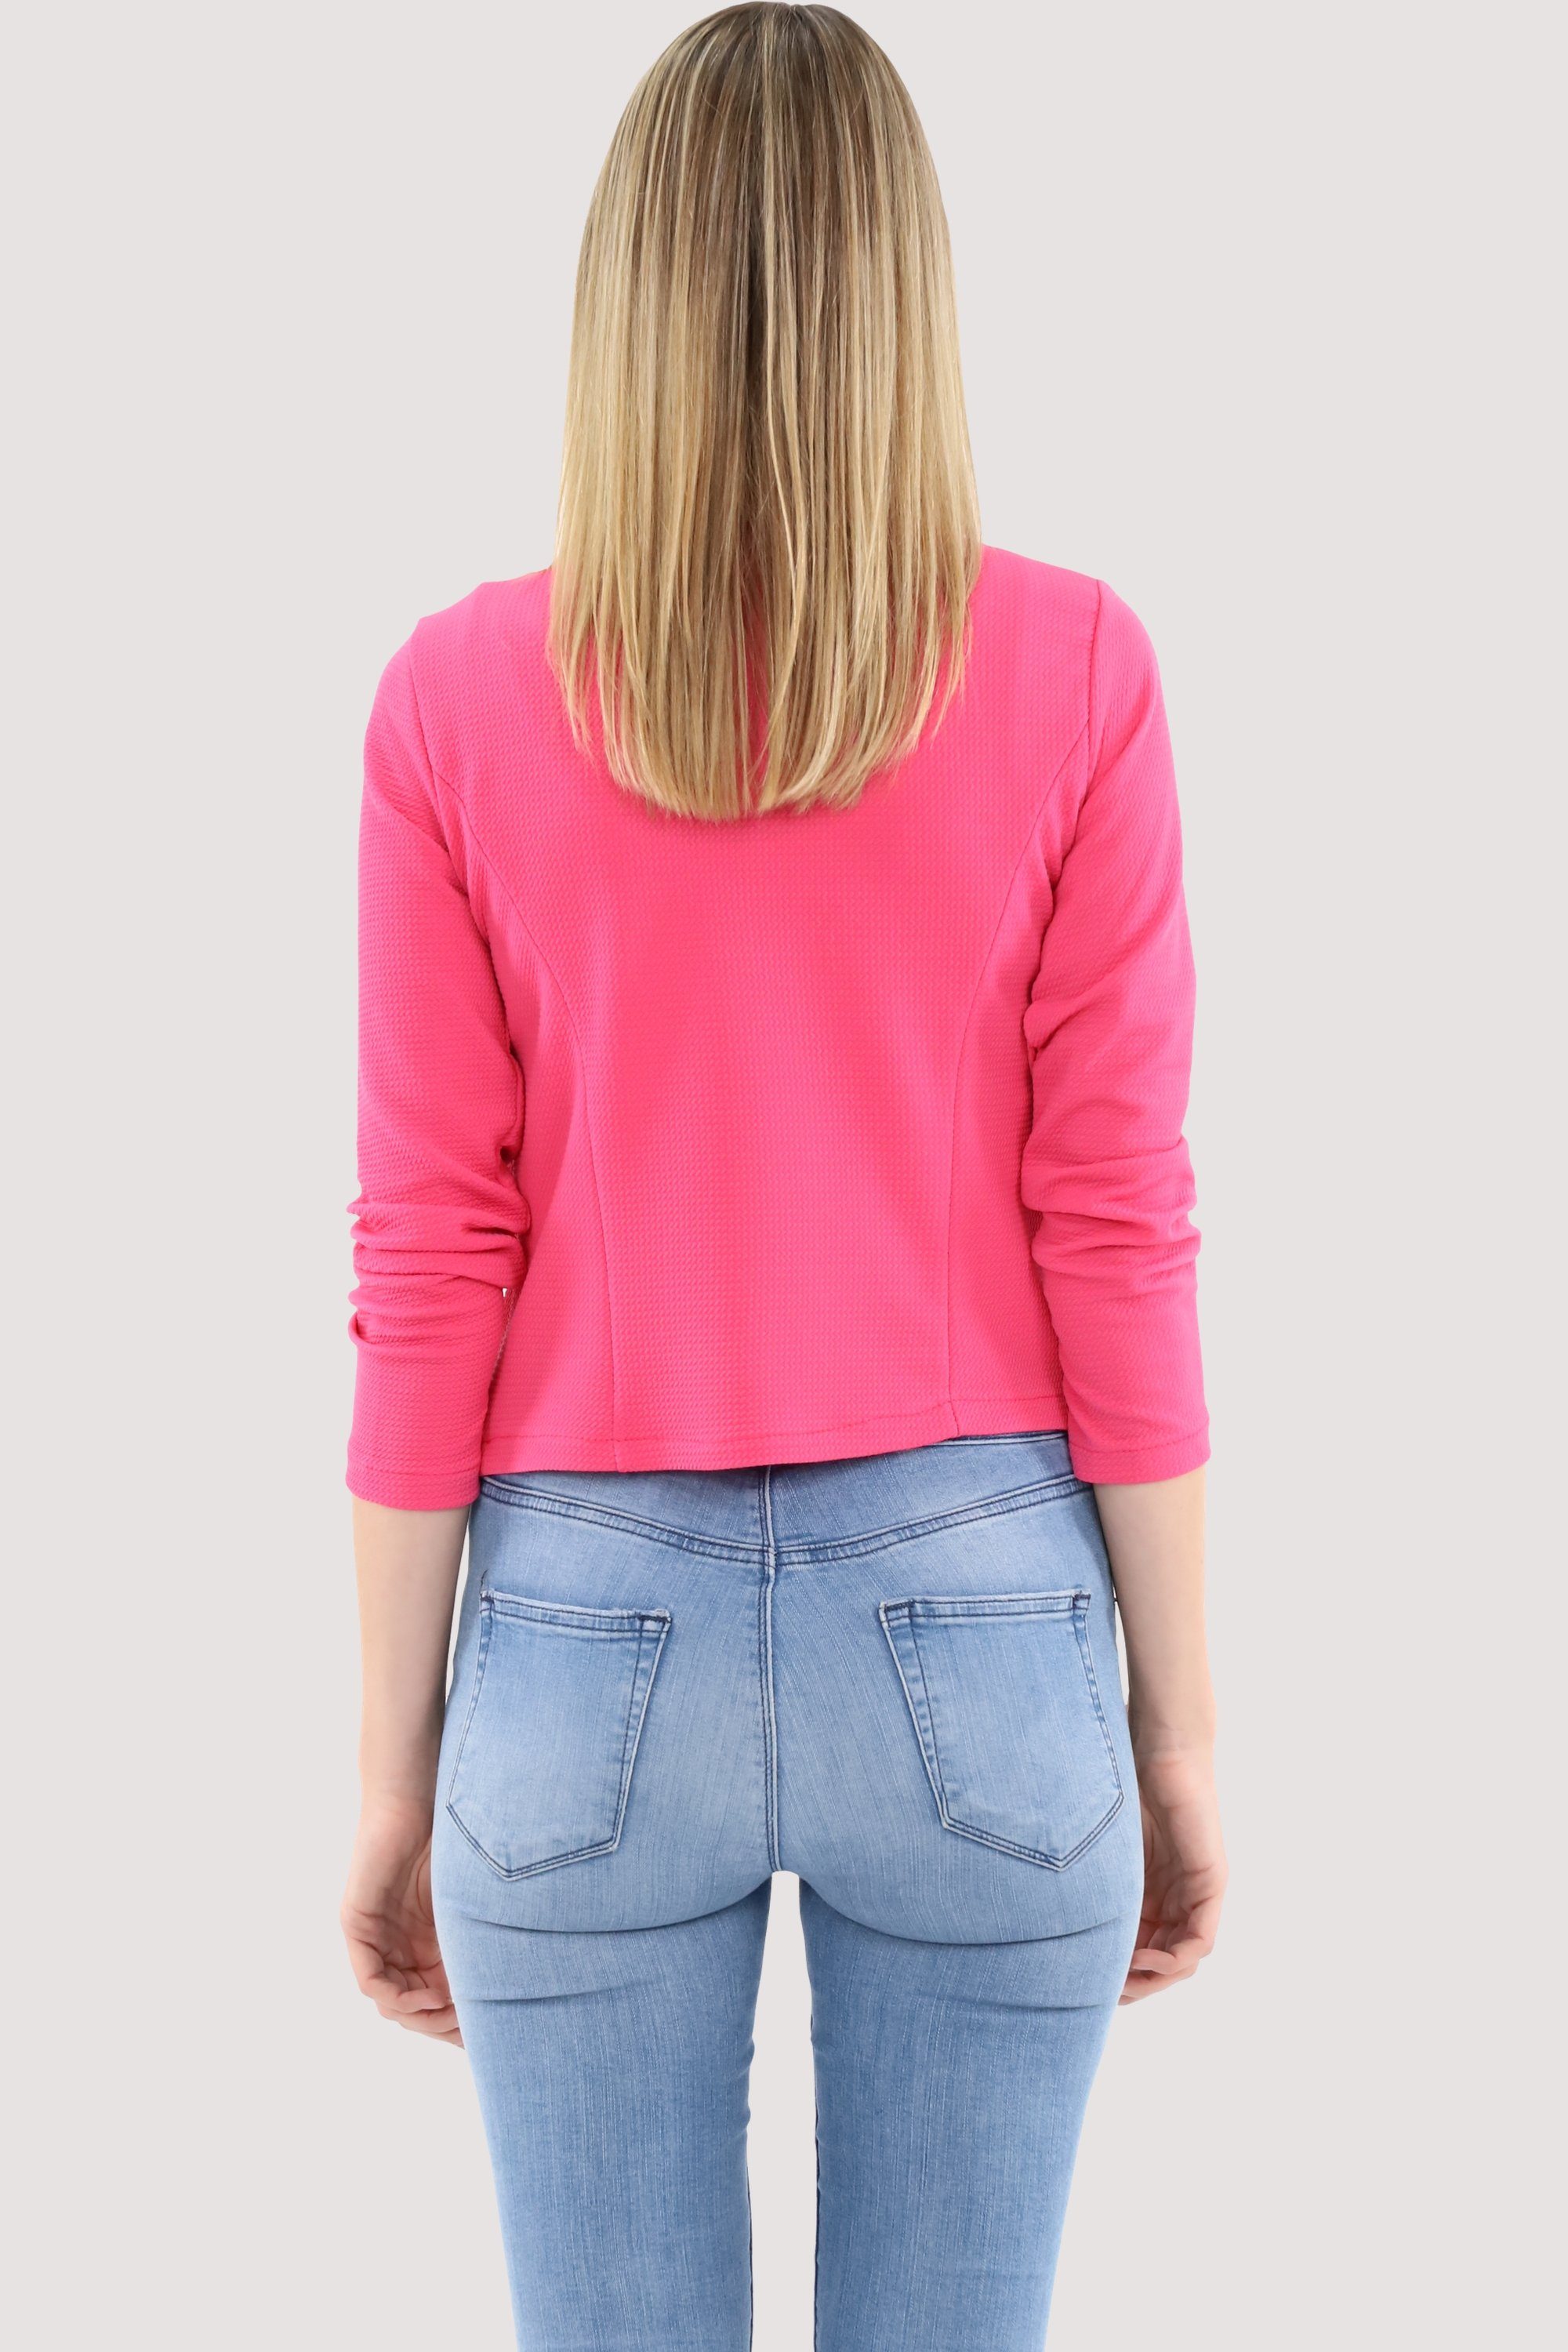 fashion more than Basic-Look malito 6040 im pink Jackenblazer Sweatblazer